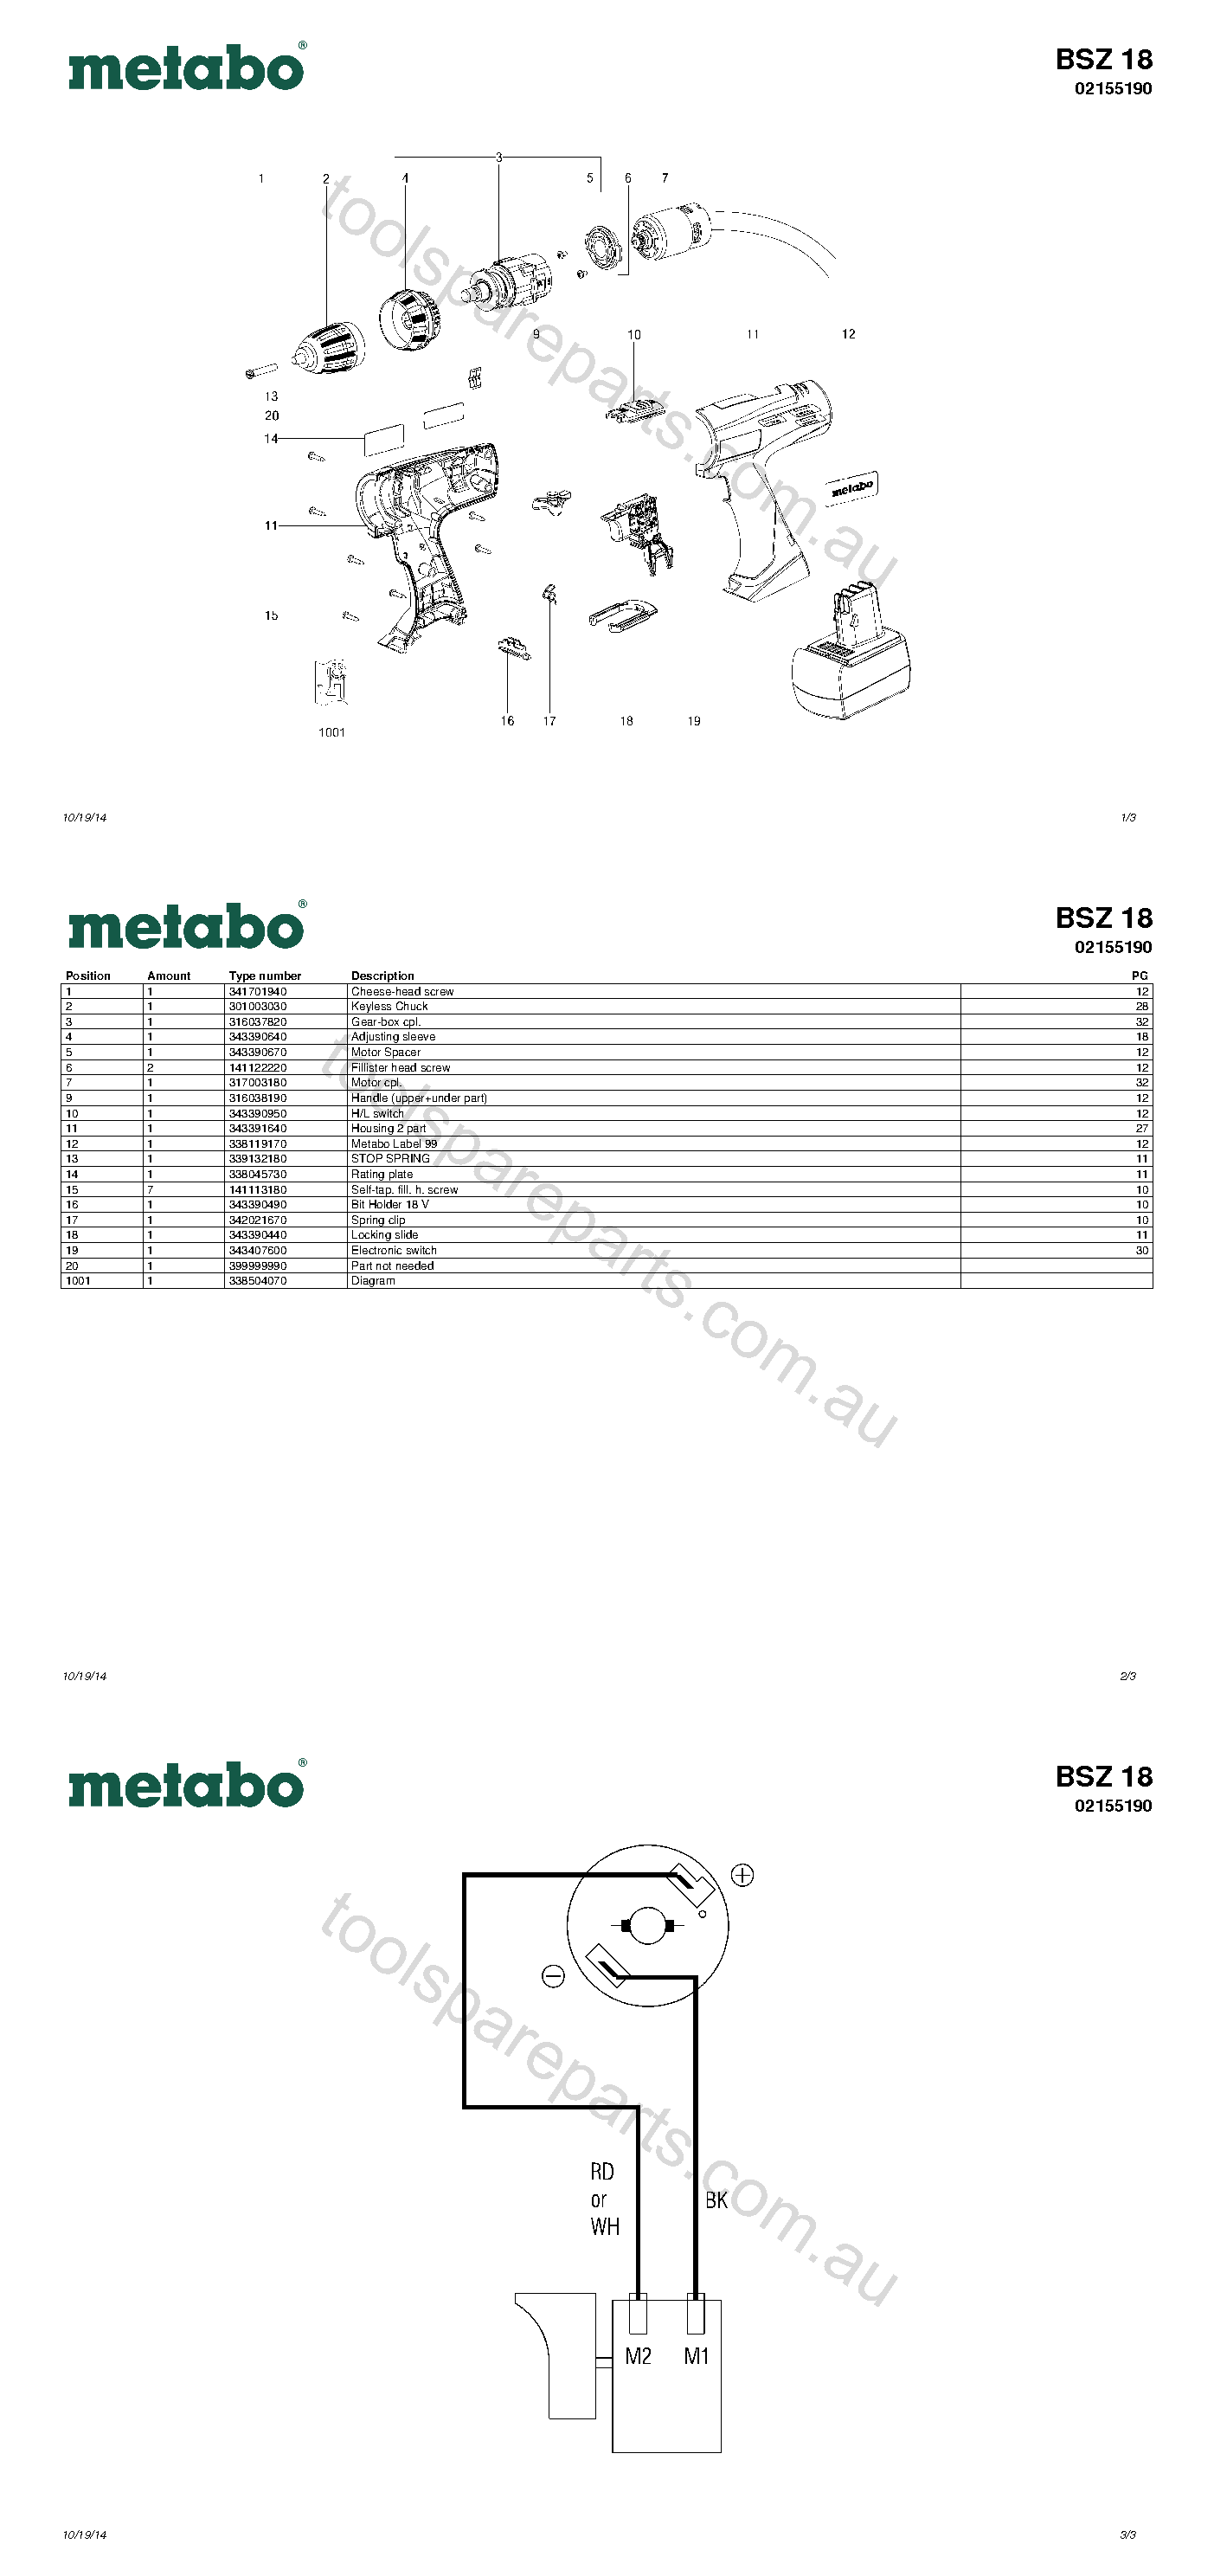 Metabo BSZ 18 02155190  Diagram 1